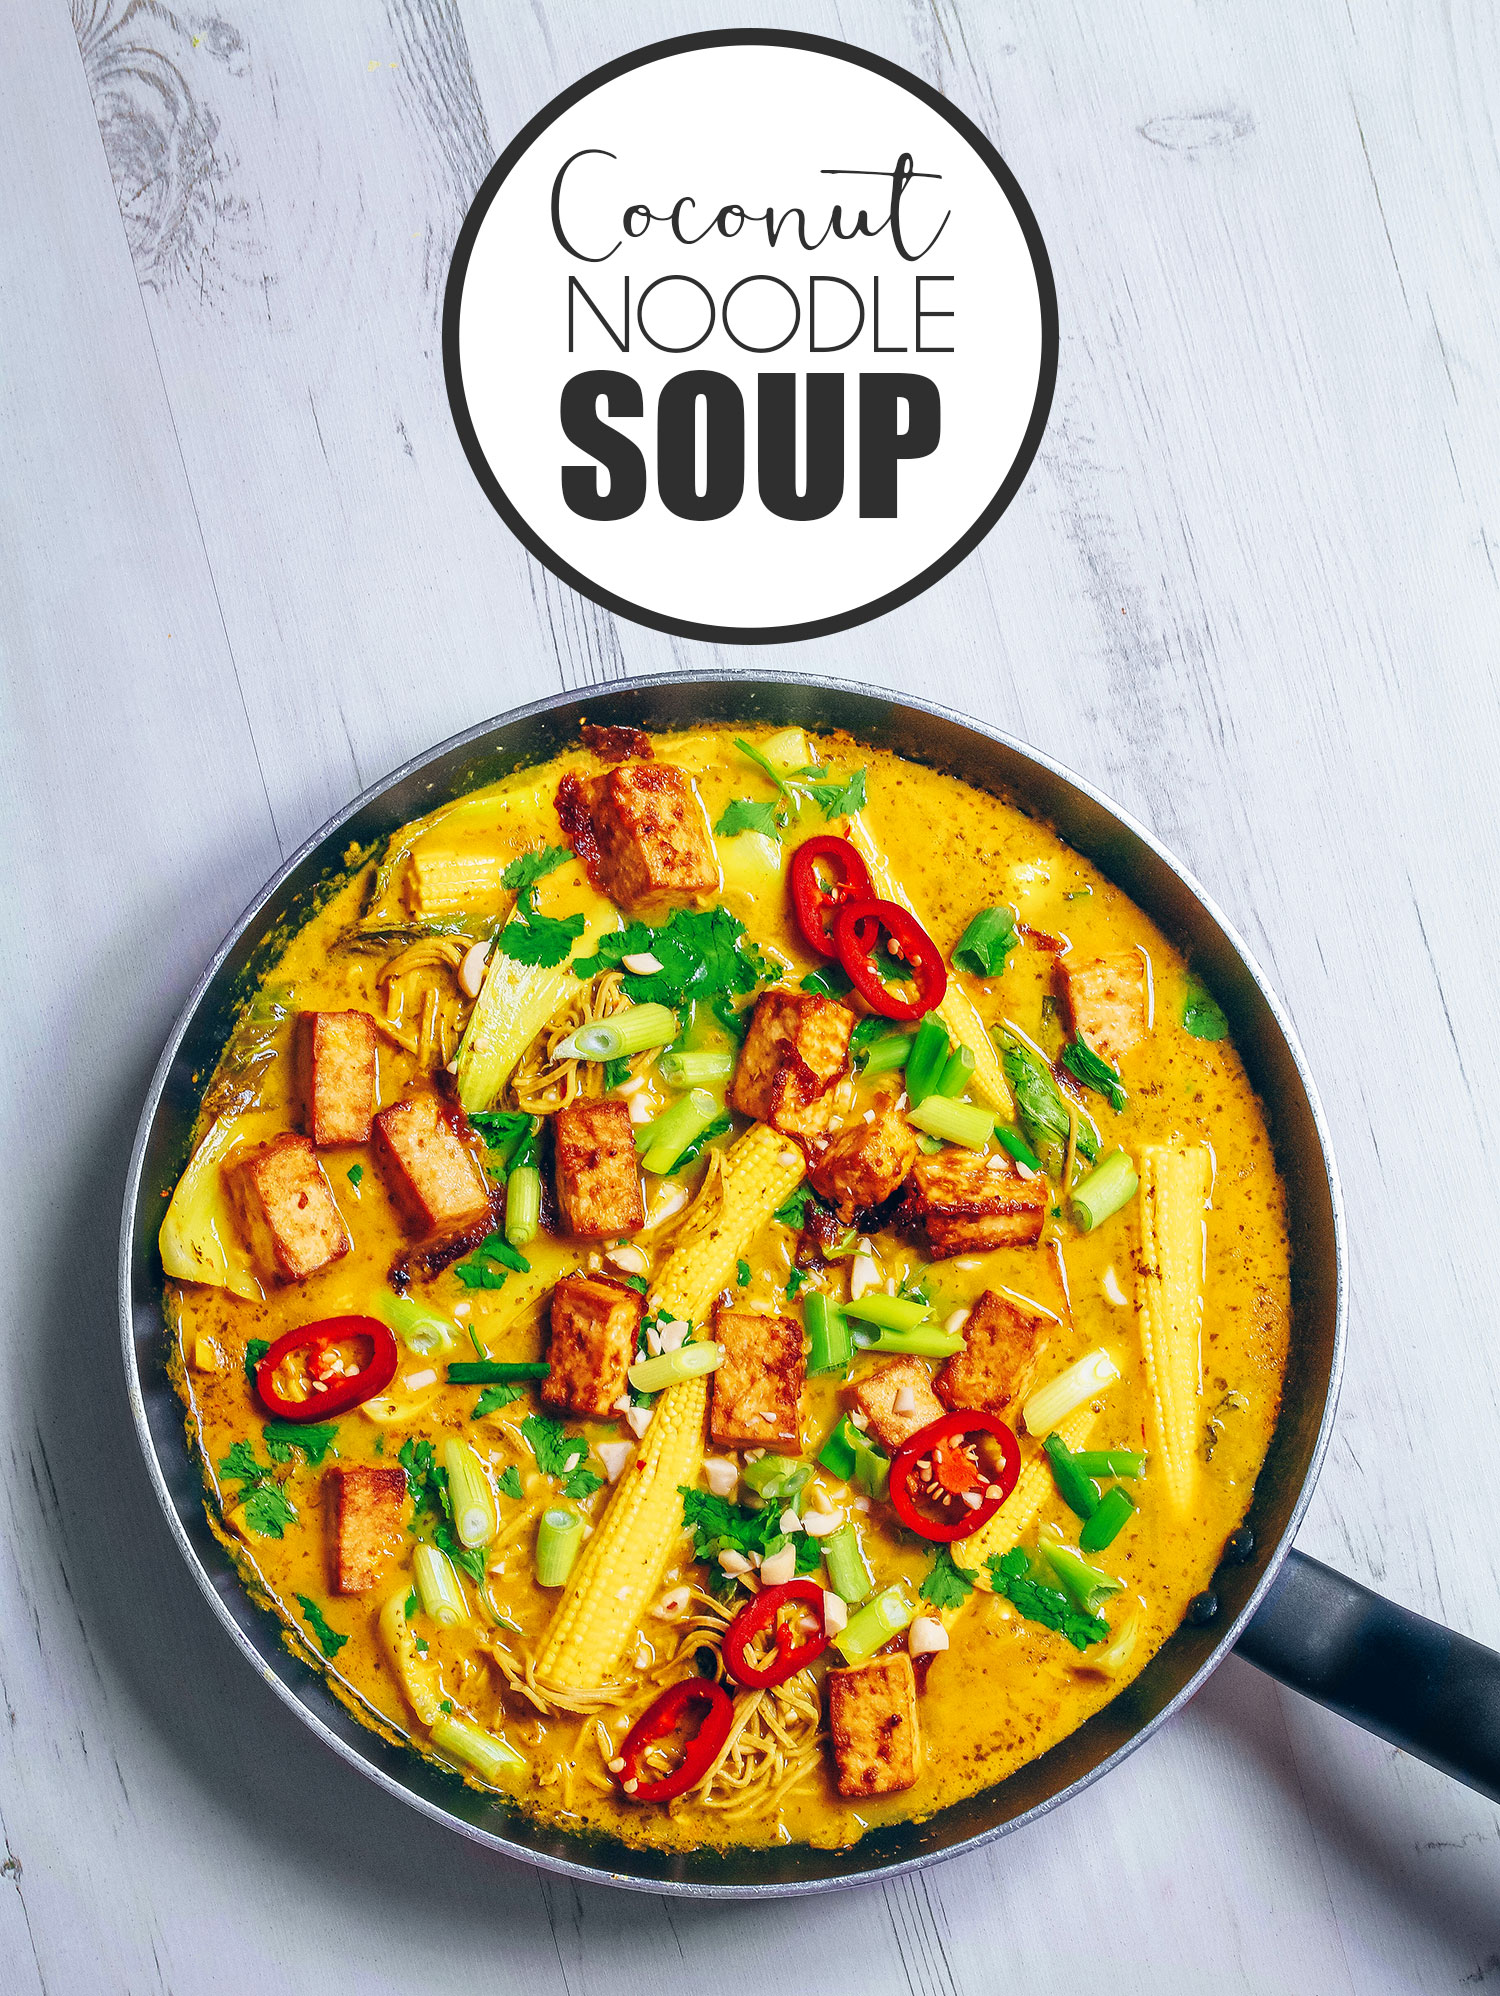 Coconut Edamame Noodle Soup (Vegan & Gluten-free) - Nadia's Healthy Kitchen